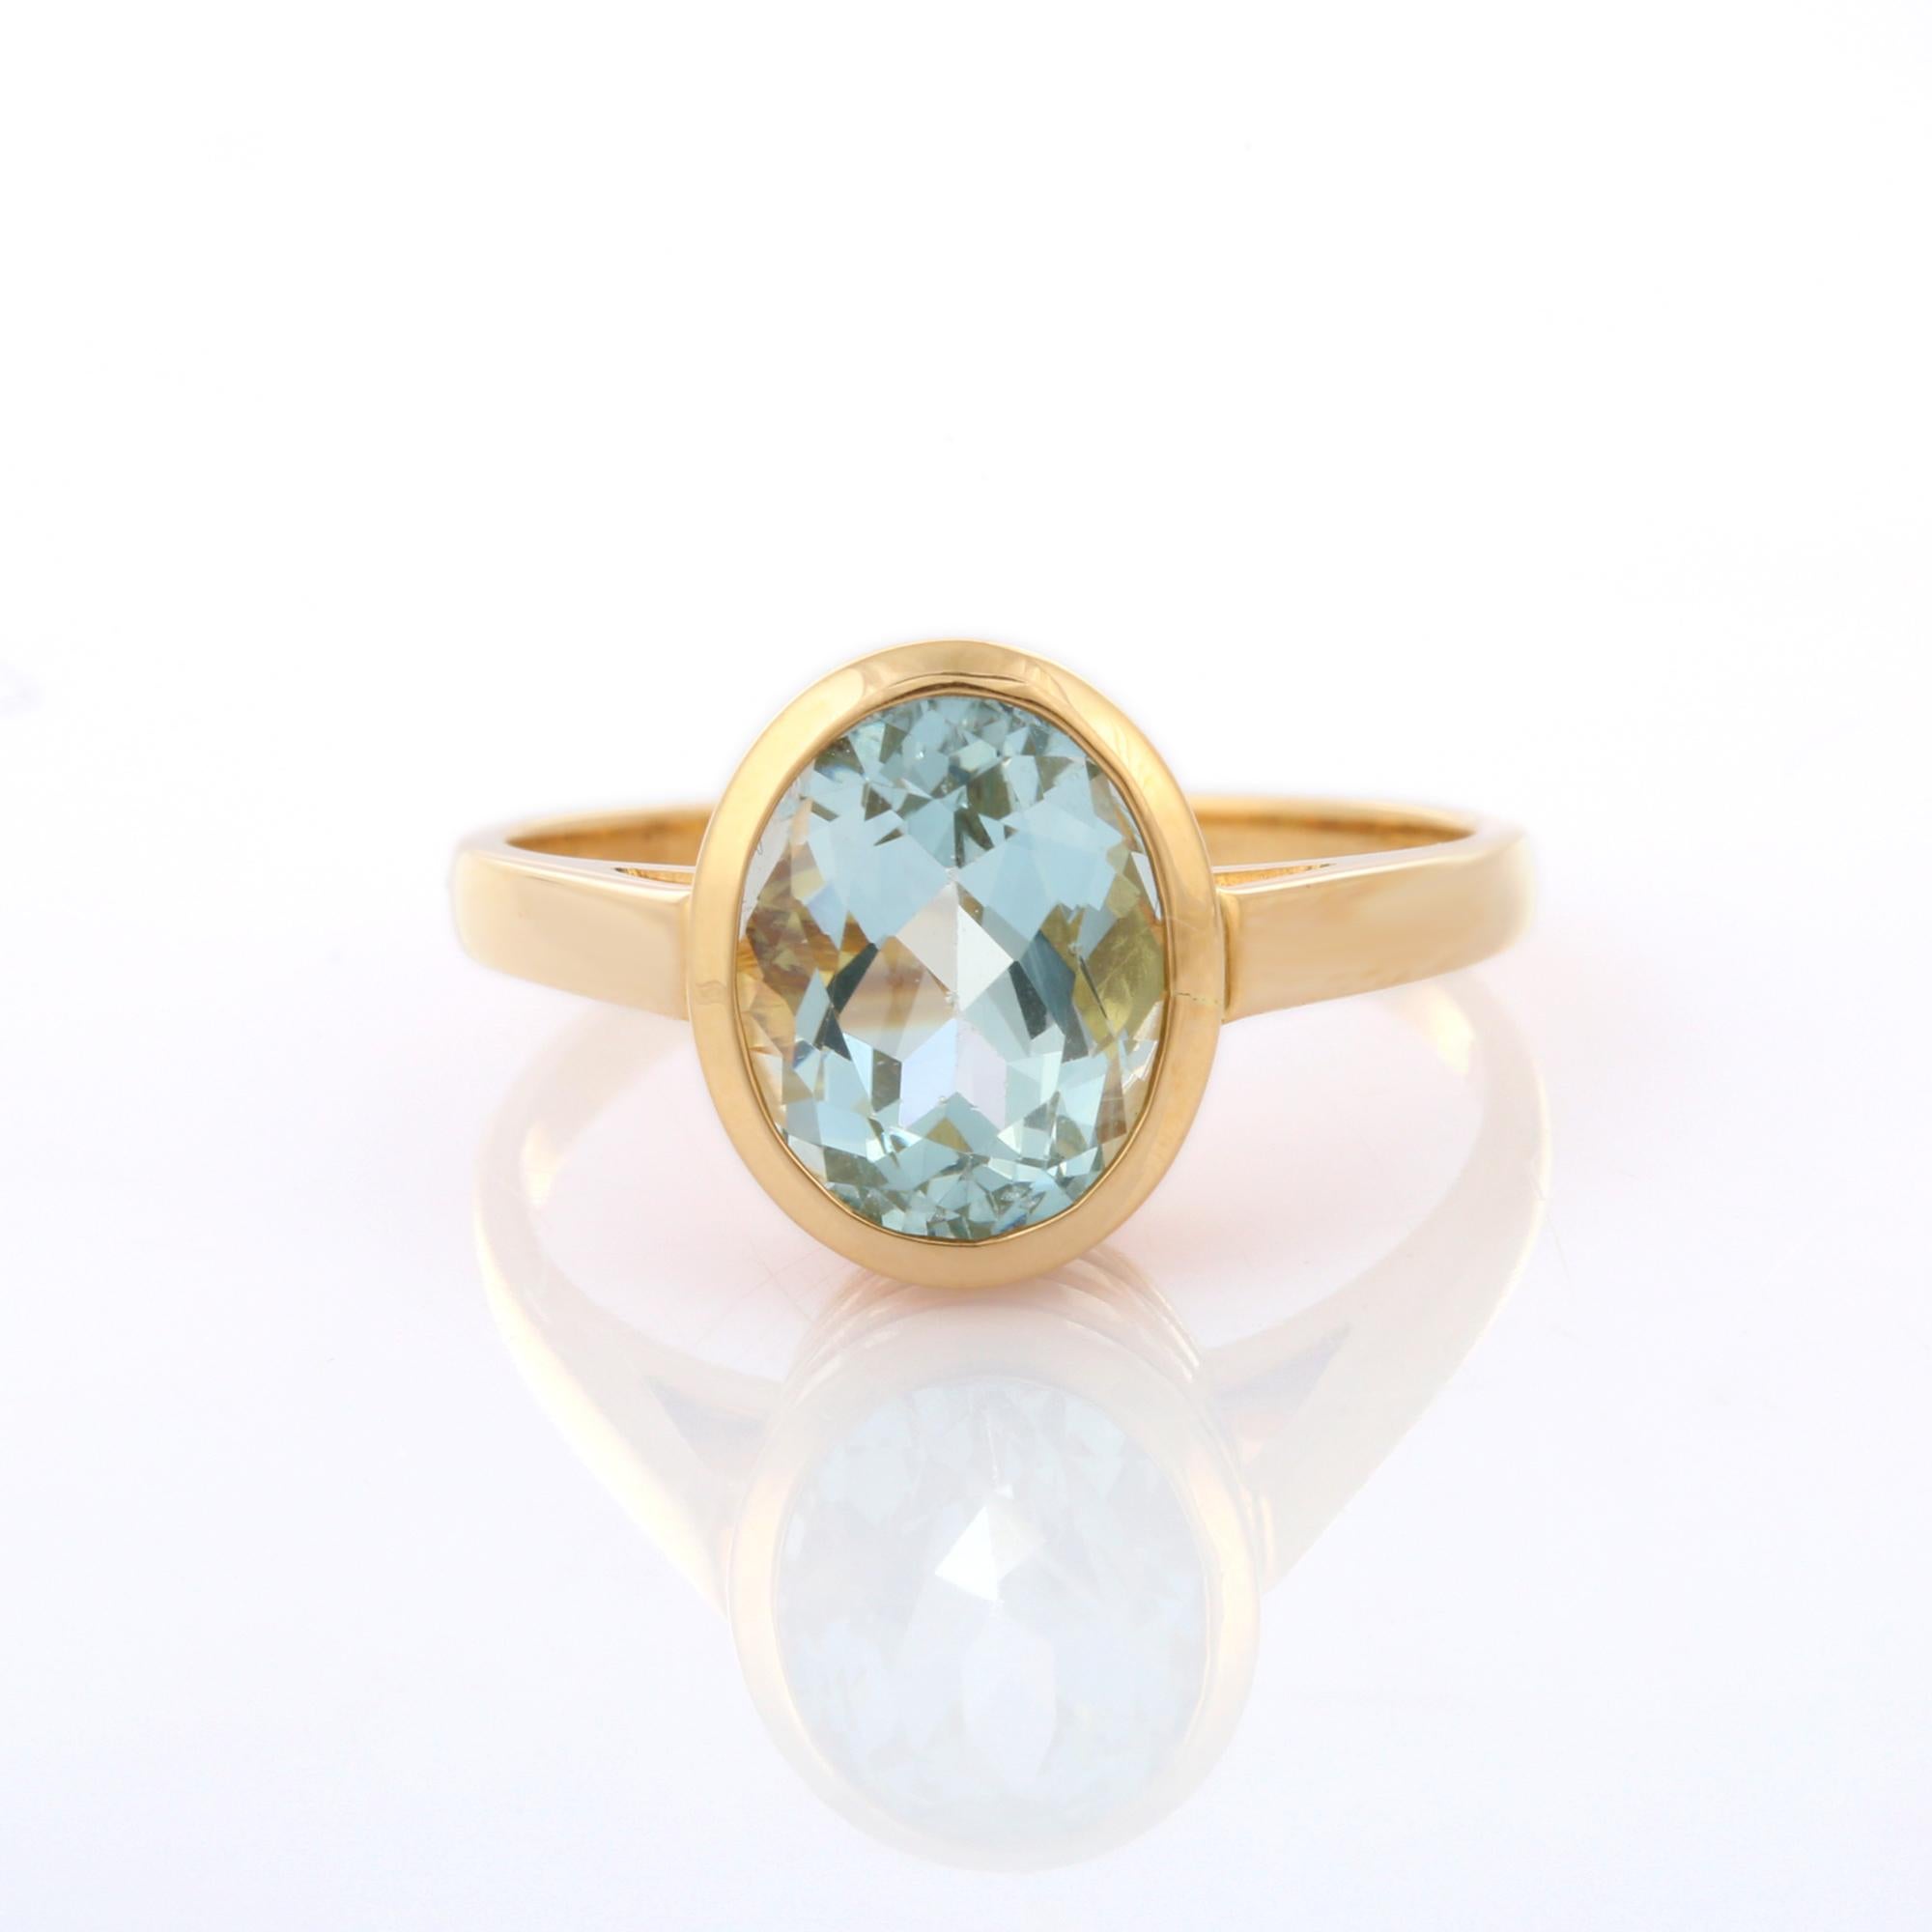 For Sale:  18K Solid Yellow Gold 2.55 ct Oval Cut Aquamarine Gemstone Ring, Aquamarine Ring 8